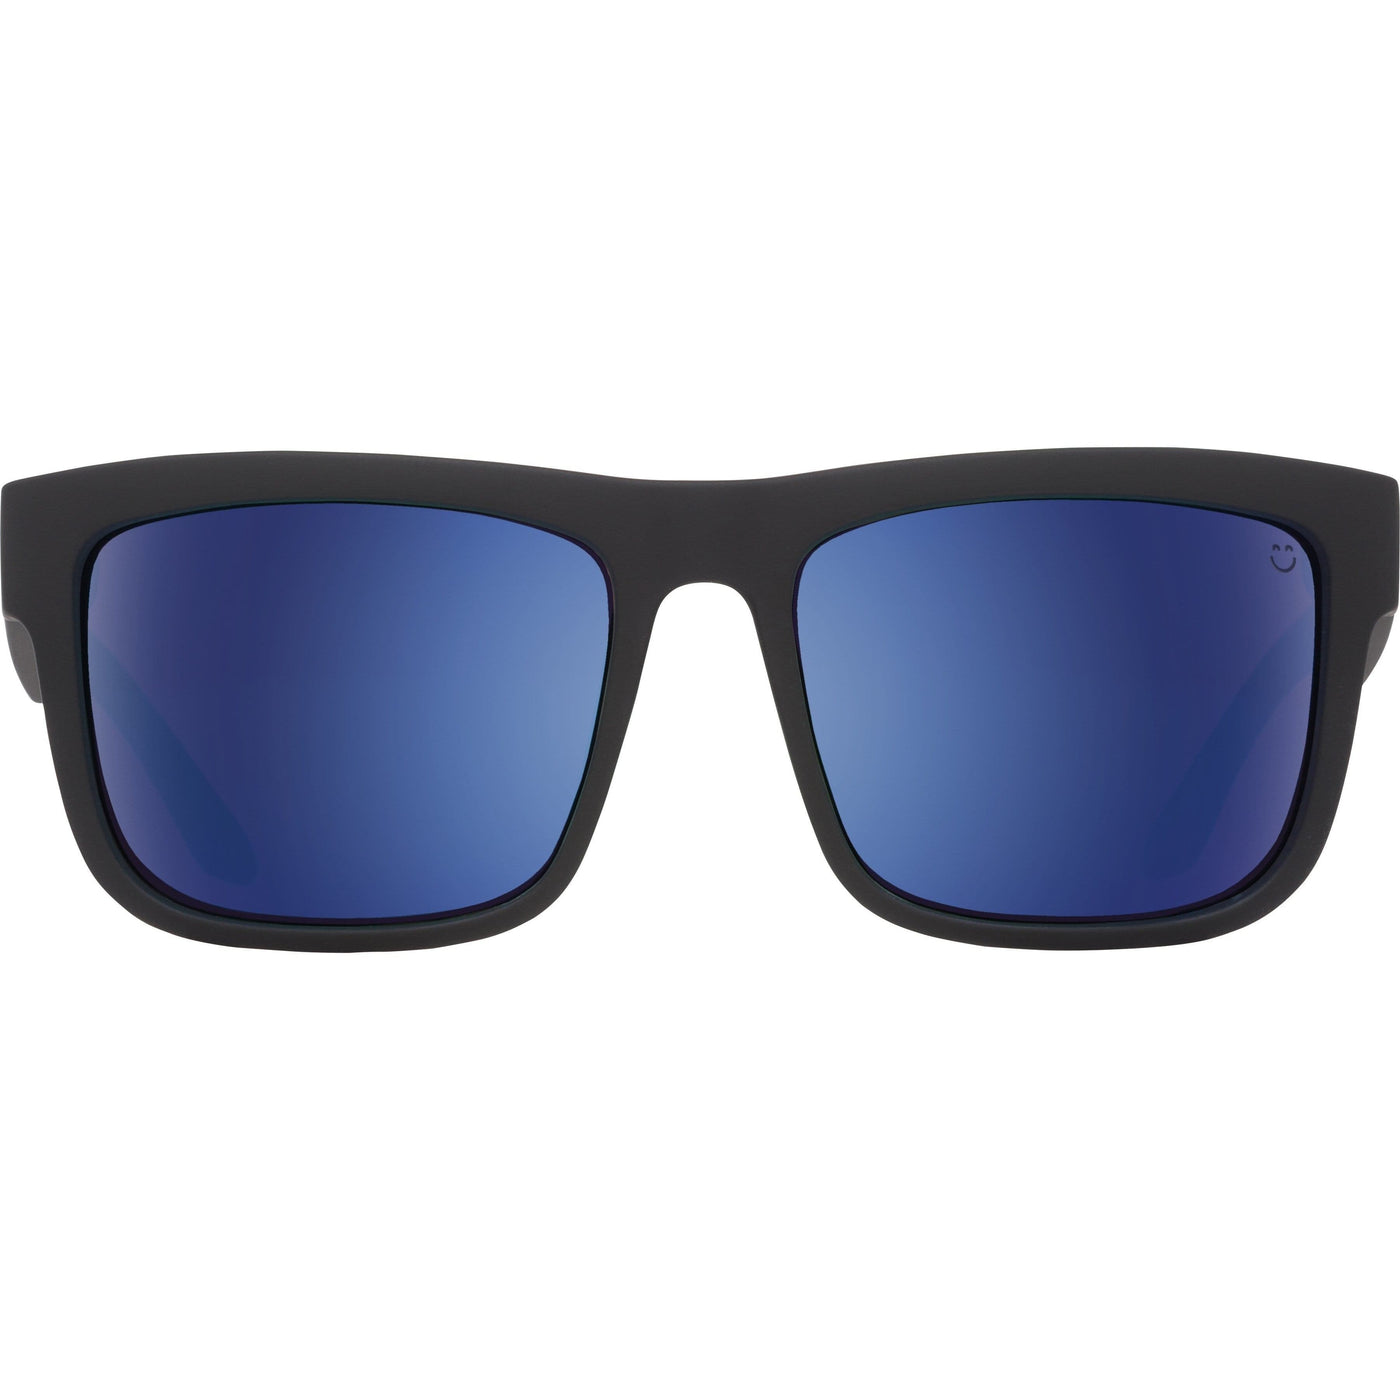 SPY Happy Lens DISCORD Polarized Sunglasses - Matte Black 8Lines Shop - Fast Shipping